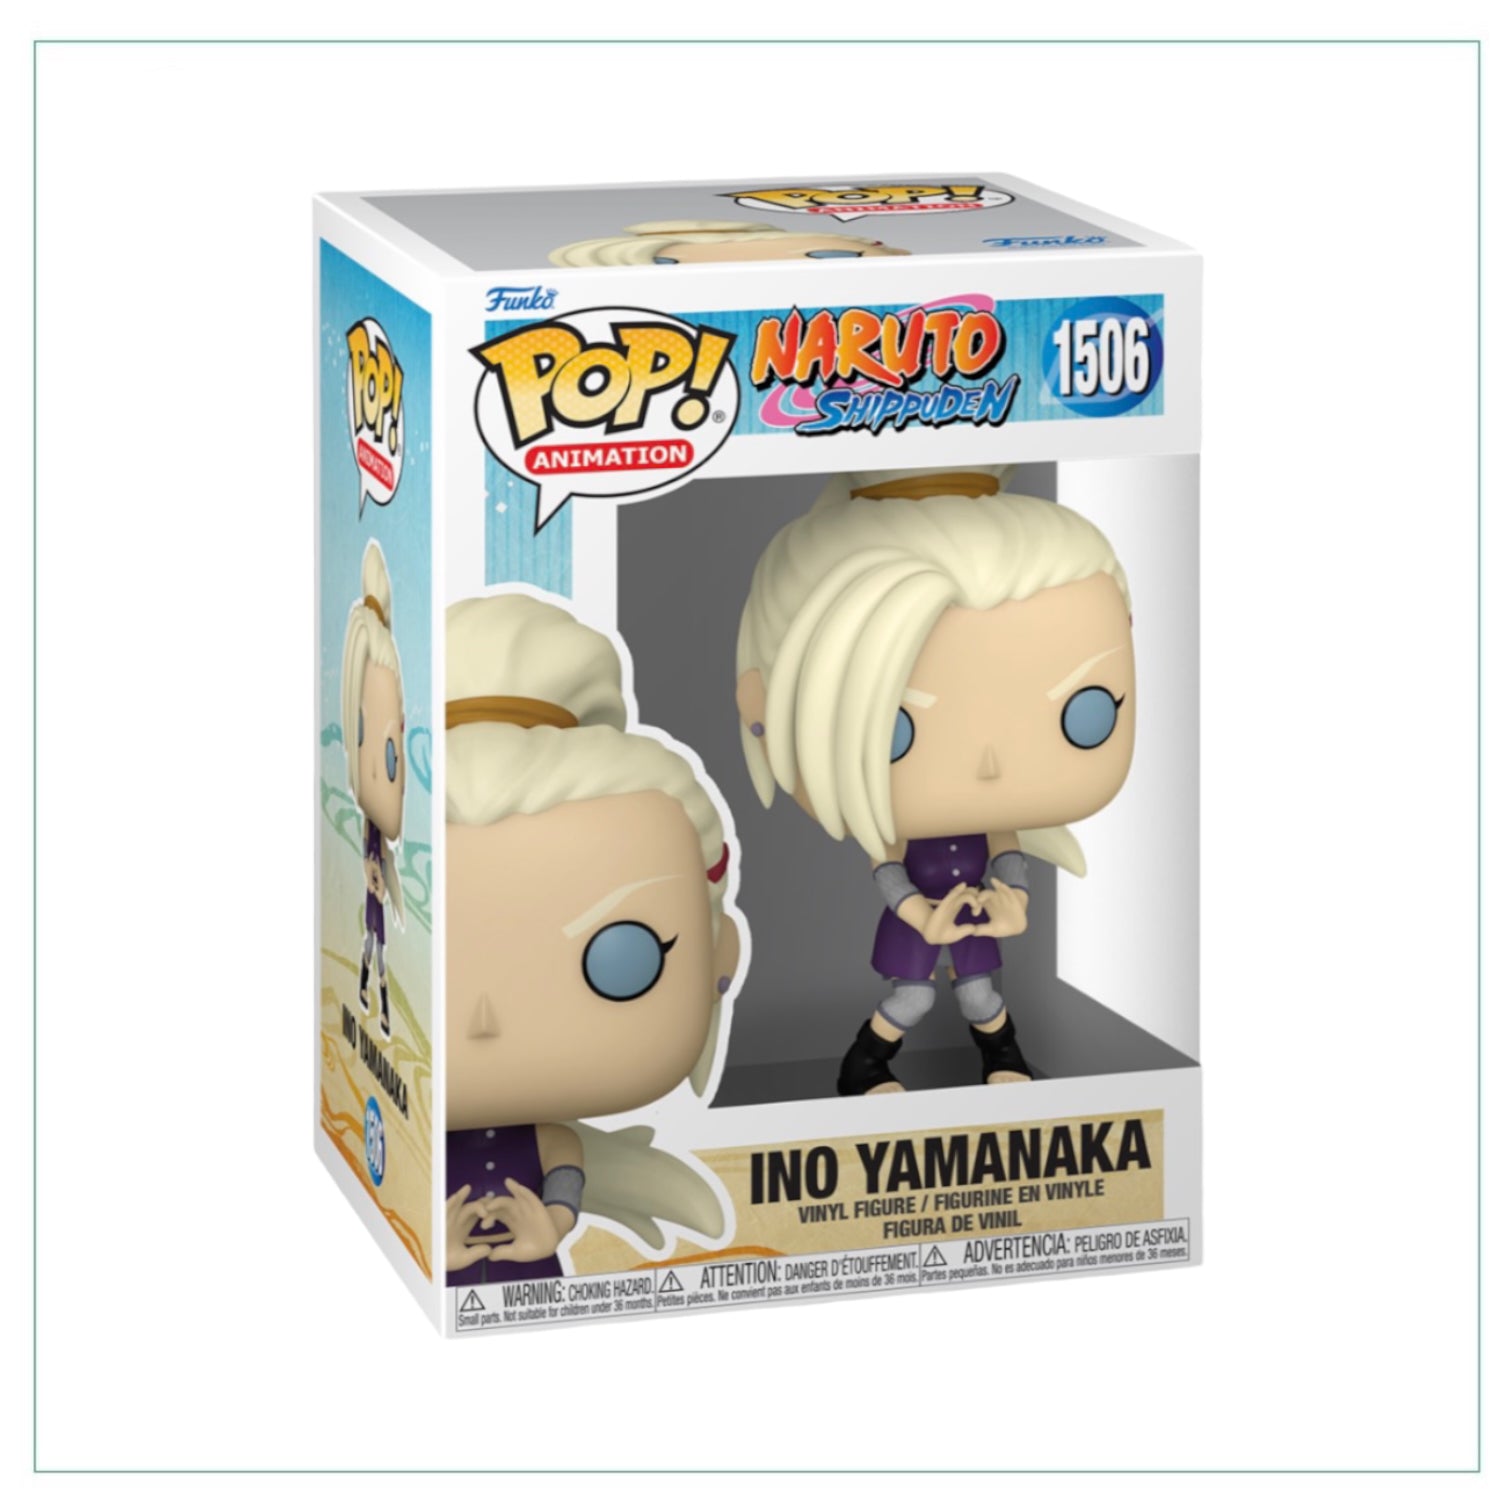 Ino Yamanaka #1506 Funko Pop! Naruto